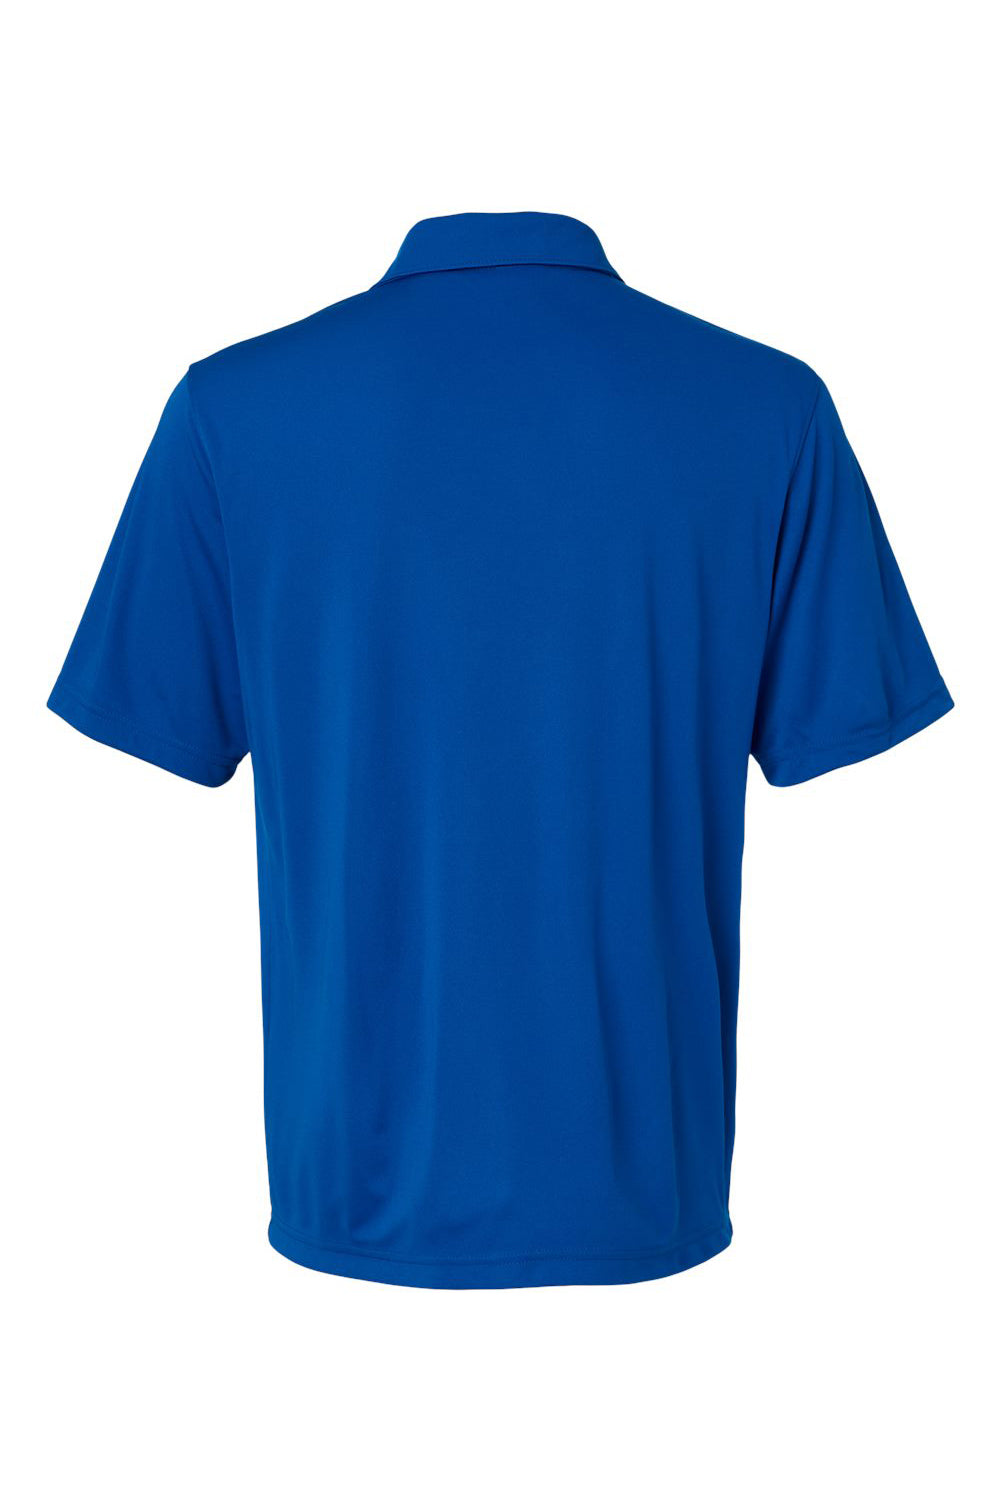 Augusta Sportswear 5017 Mens Vital Moisture Wicking Short Sleeve Polo Shirt Royal Blue Flat Back